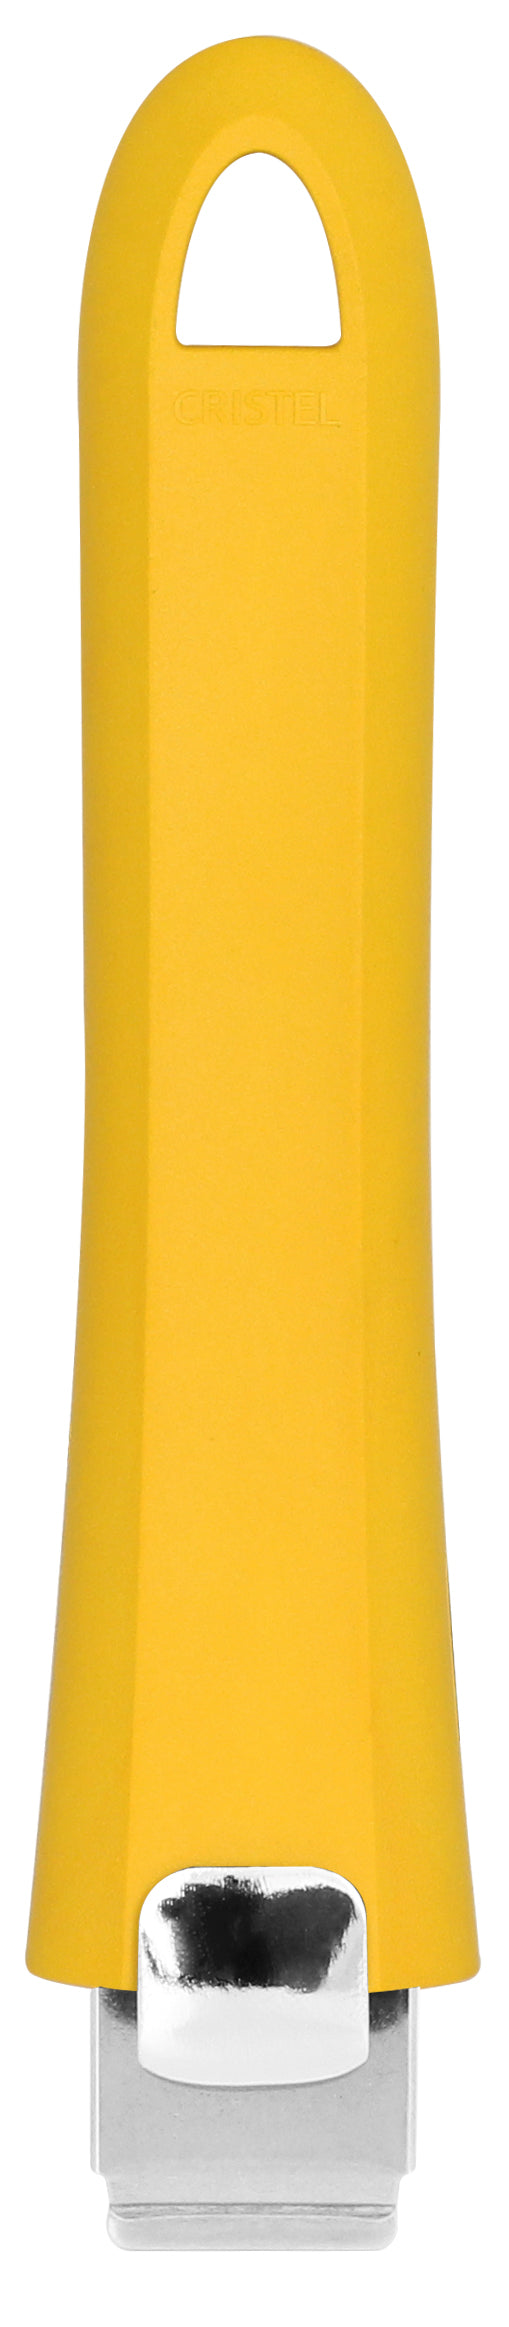 Poignée Mutine amovible jaune | CRISTEL